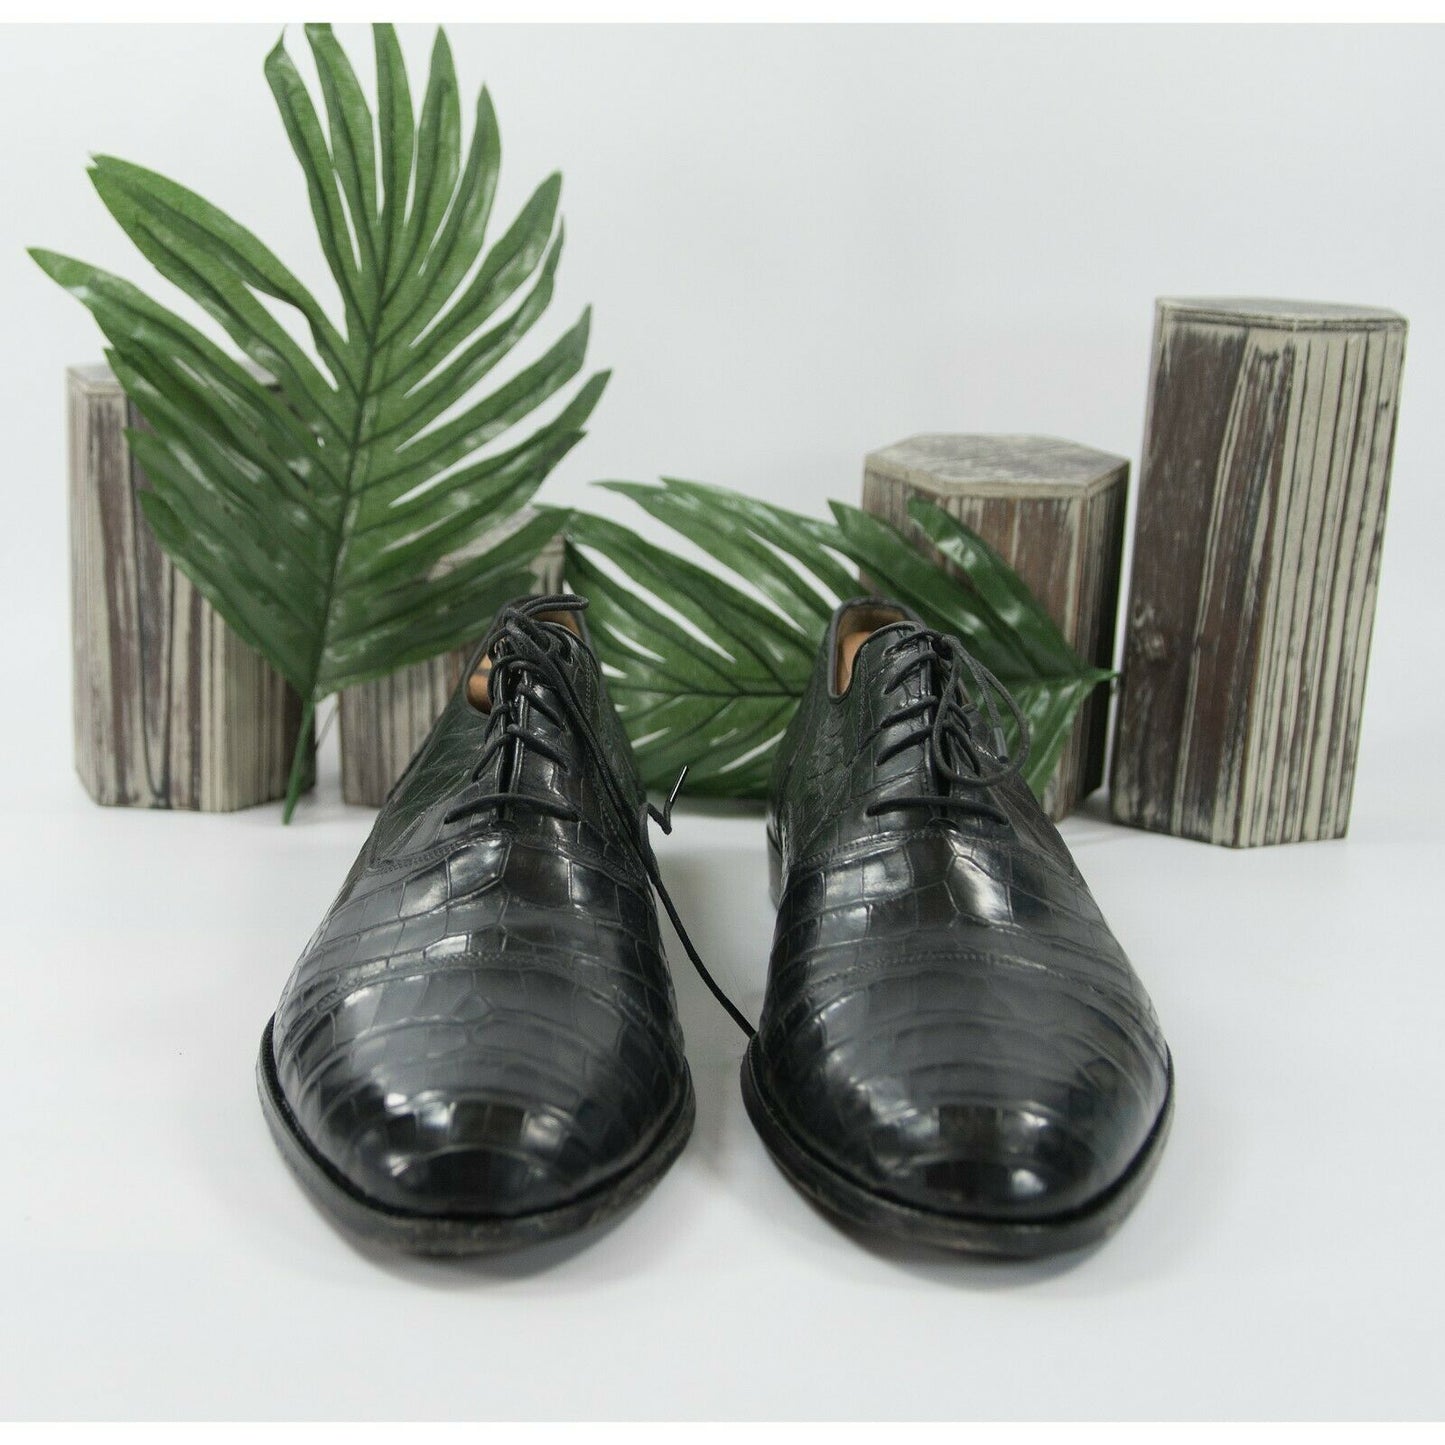 Davanzati Black Croc Leather Lace Up Oxford Loafer Shoes Size 13